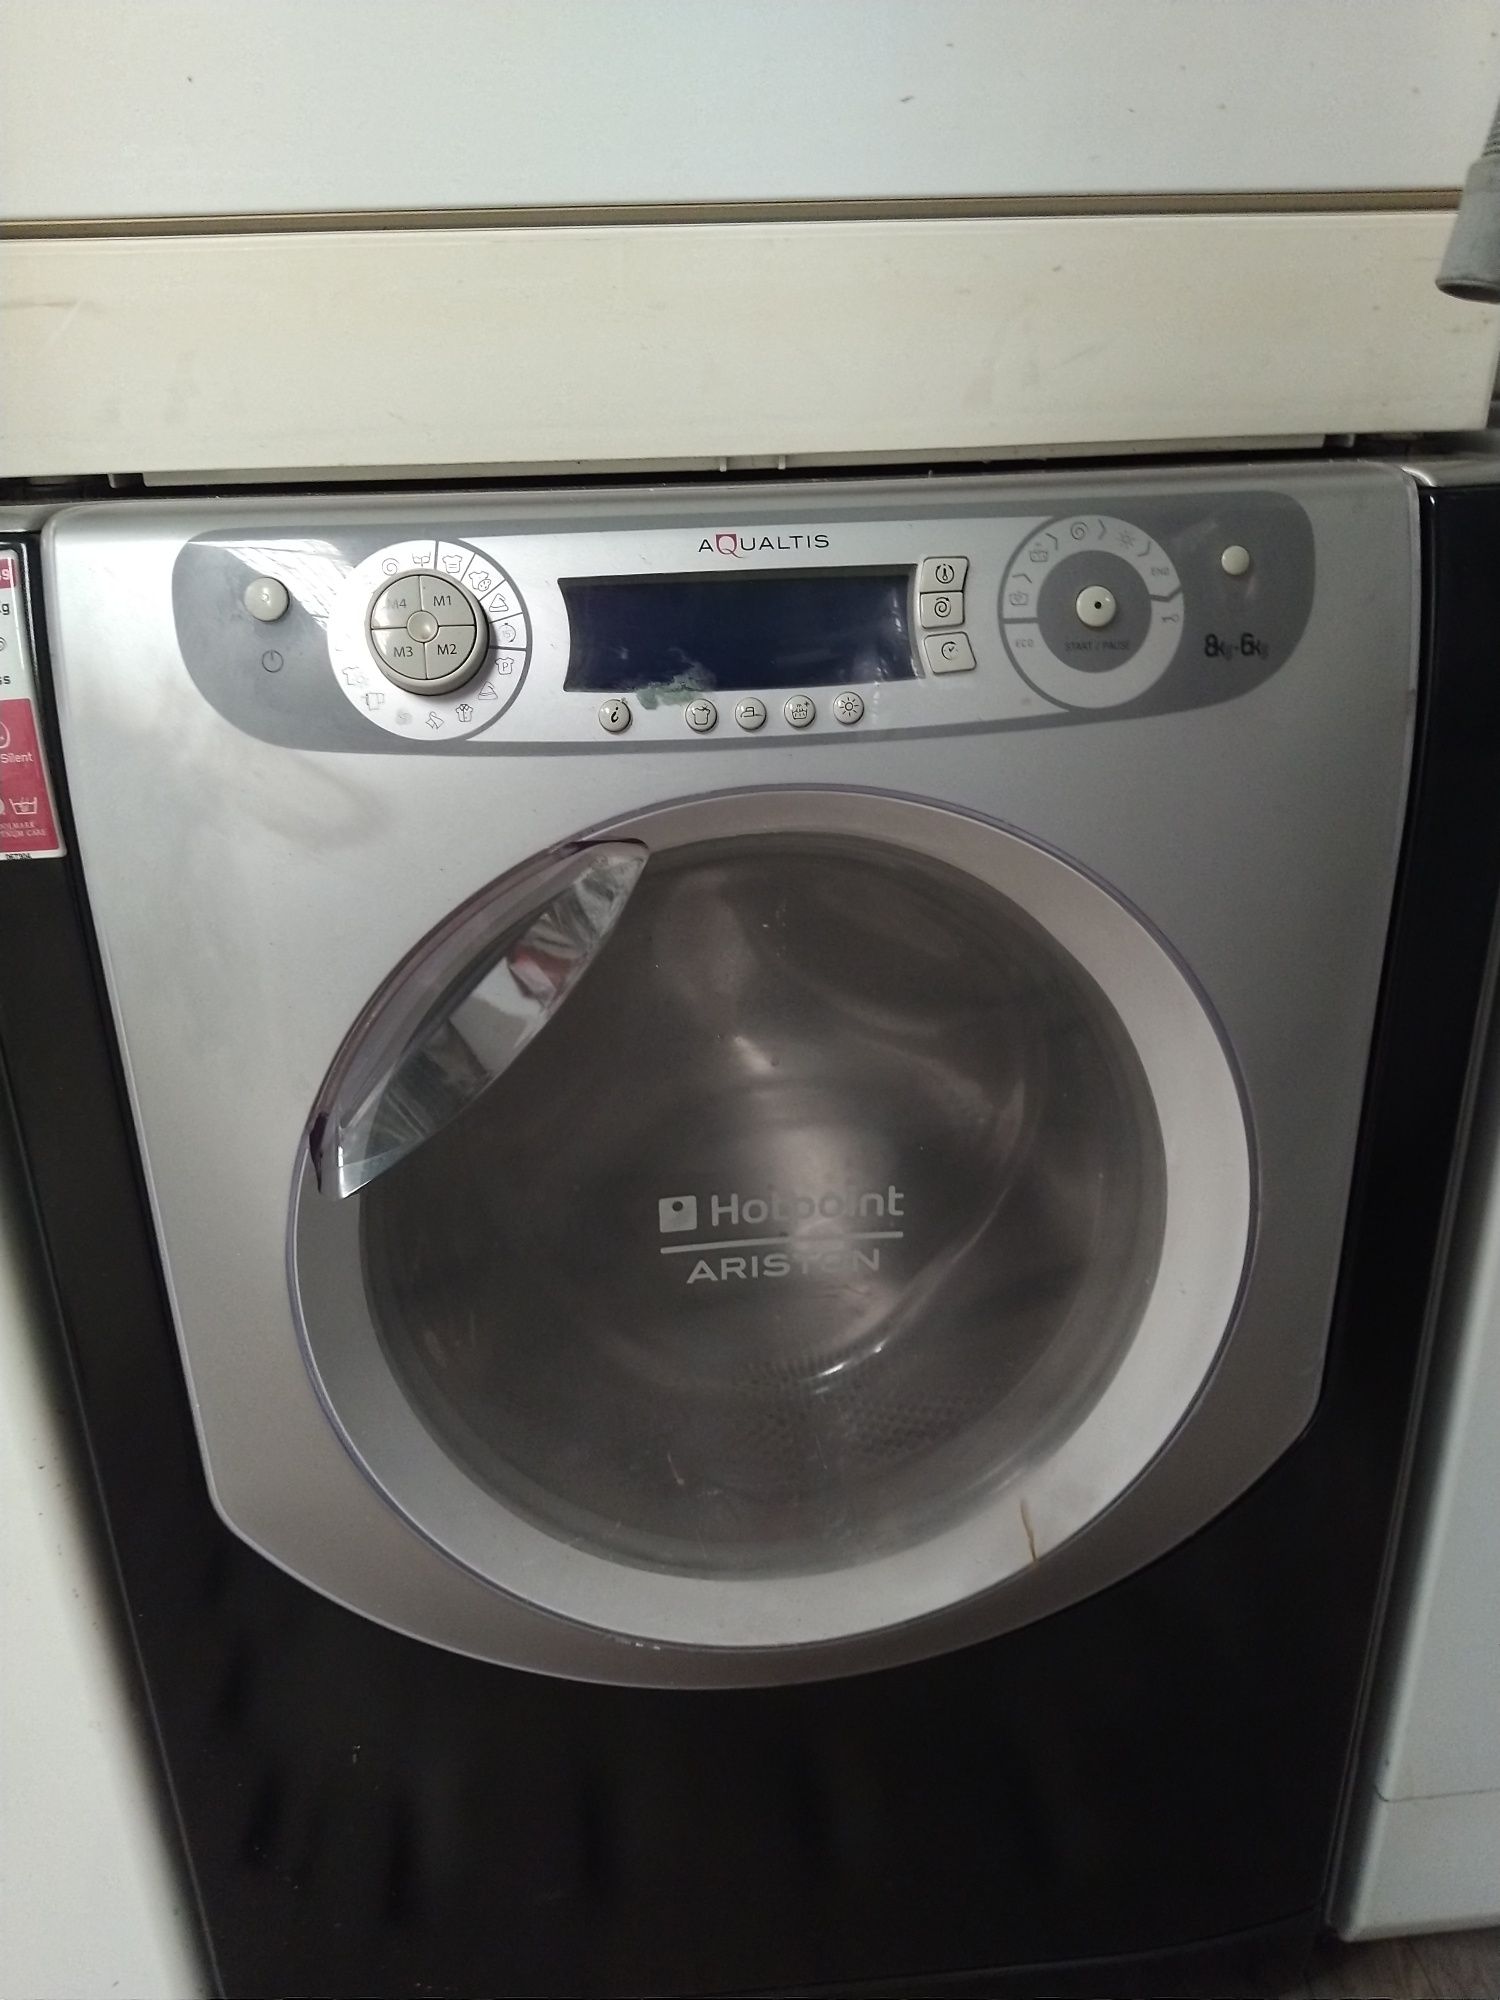 Entrega garantia máquina de lavar roupa e secar Ariston hotpoint 8+6